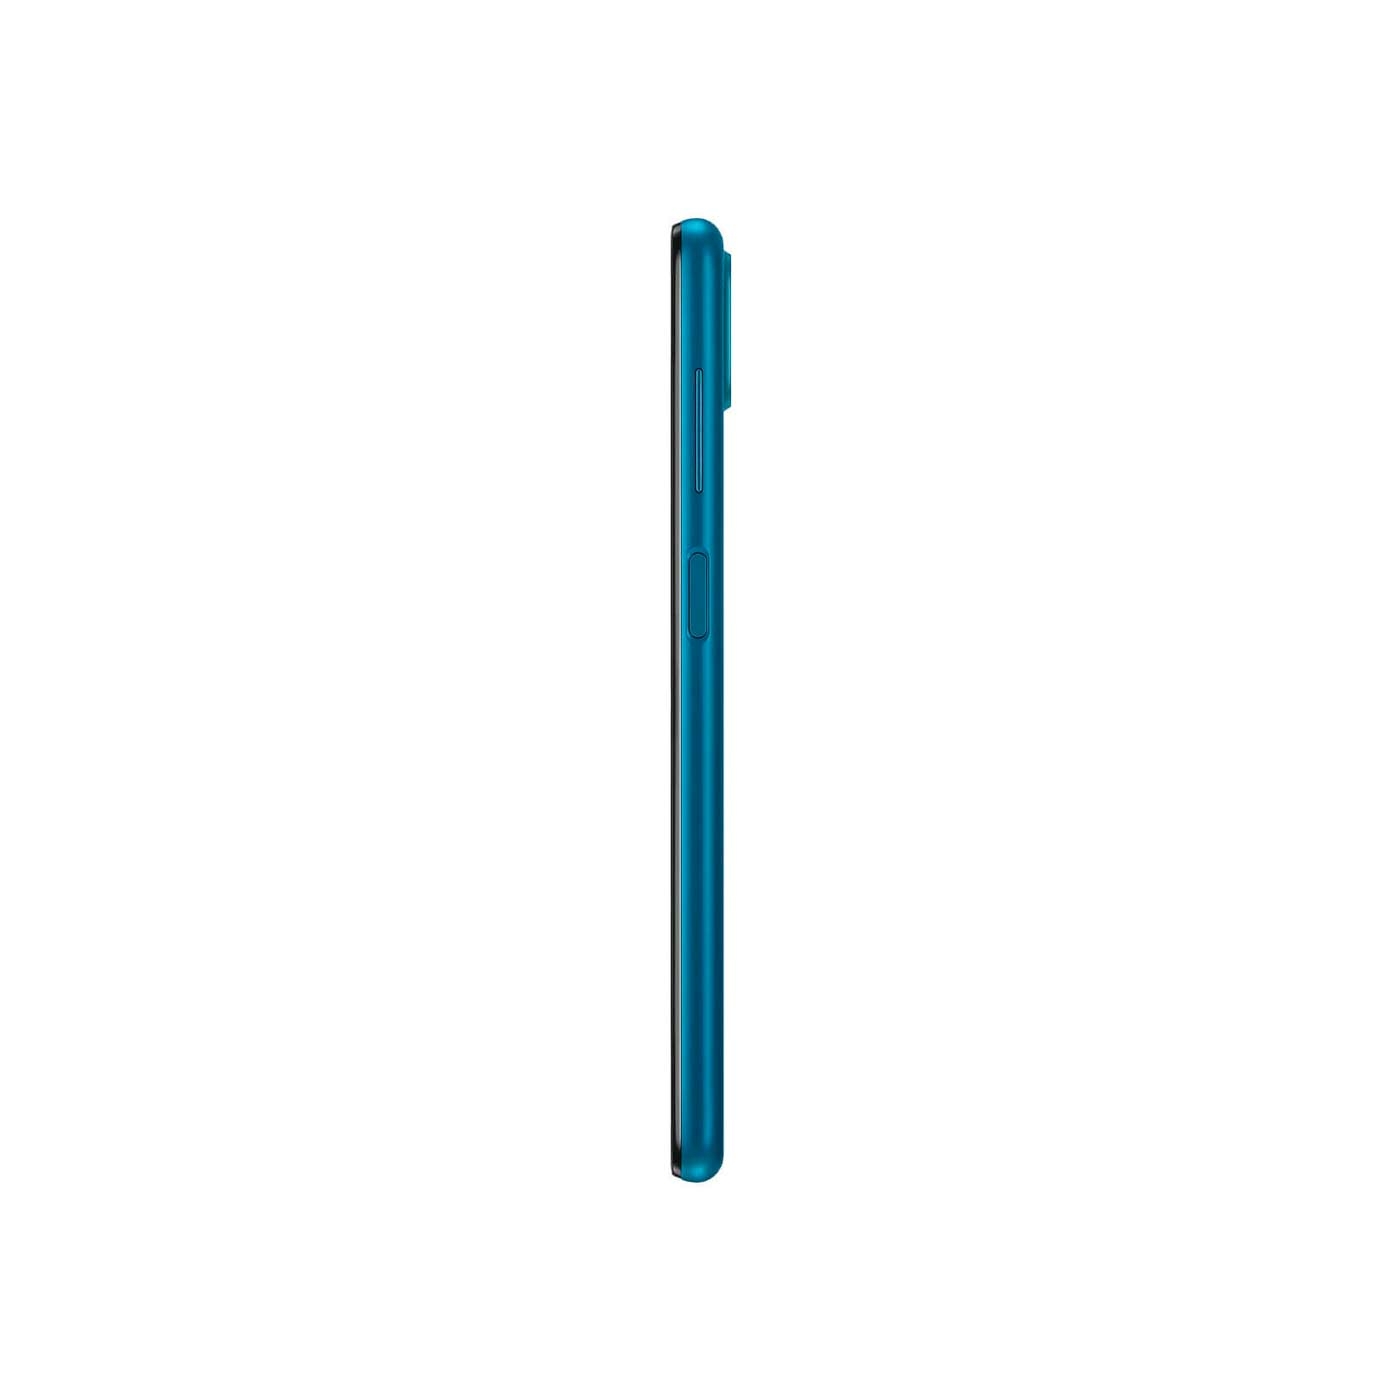 Celular SAMSUNG Galaxy A12 128GB Azul